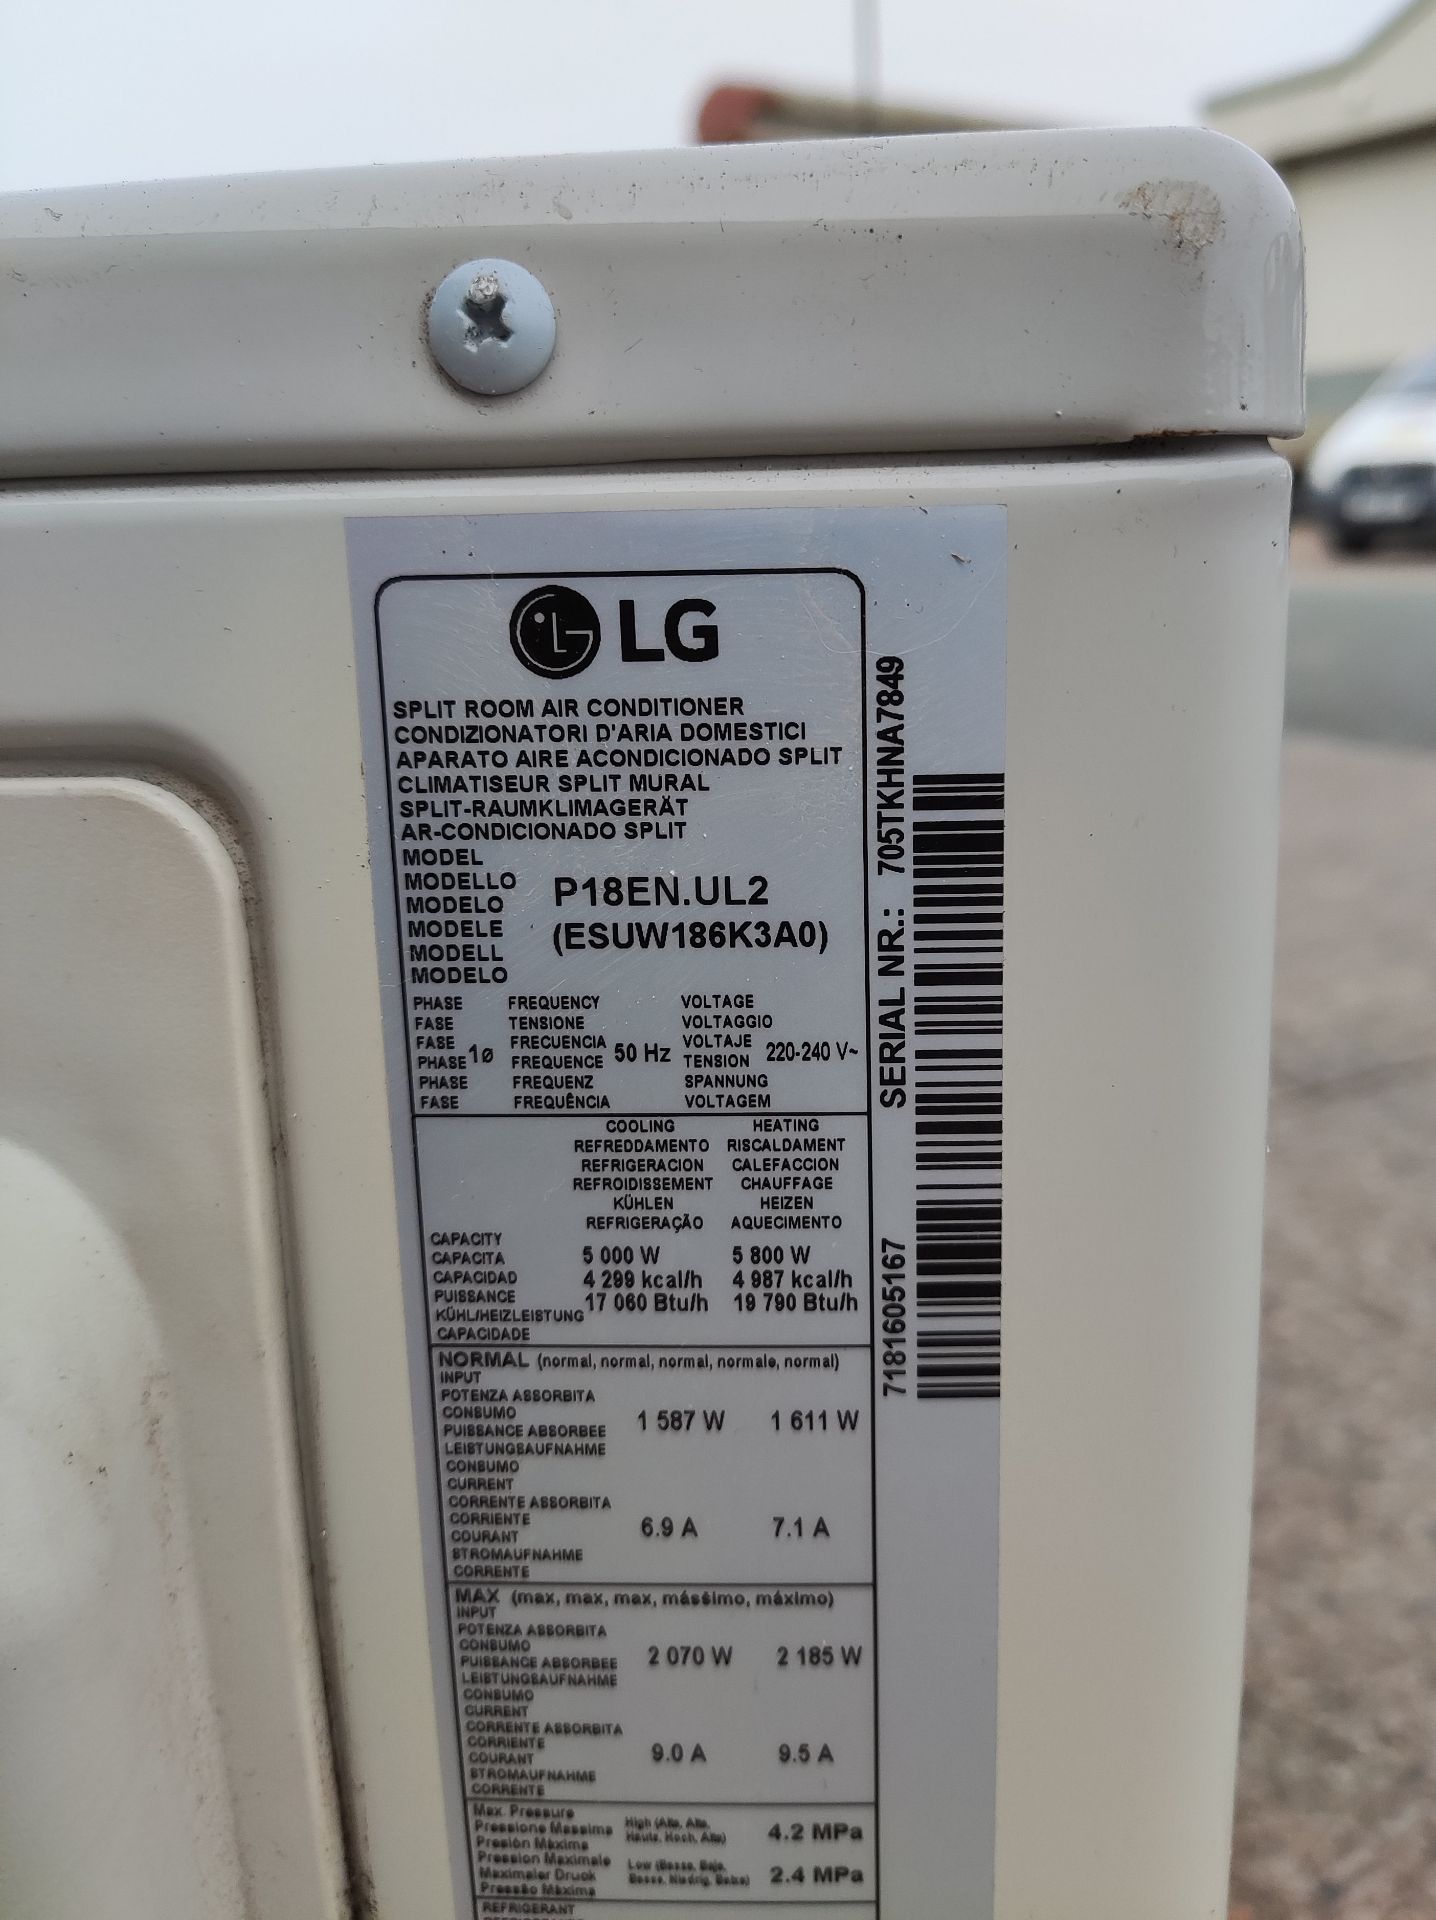 1 x LG Smart Inverter Split Room Air Conditioner - Model: P18EN.UL2 - JMCS123 - CL723 - Location: - Image 3 of 7